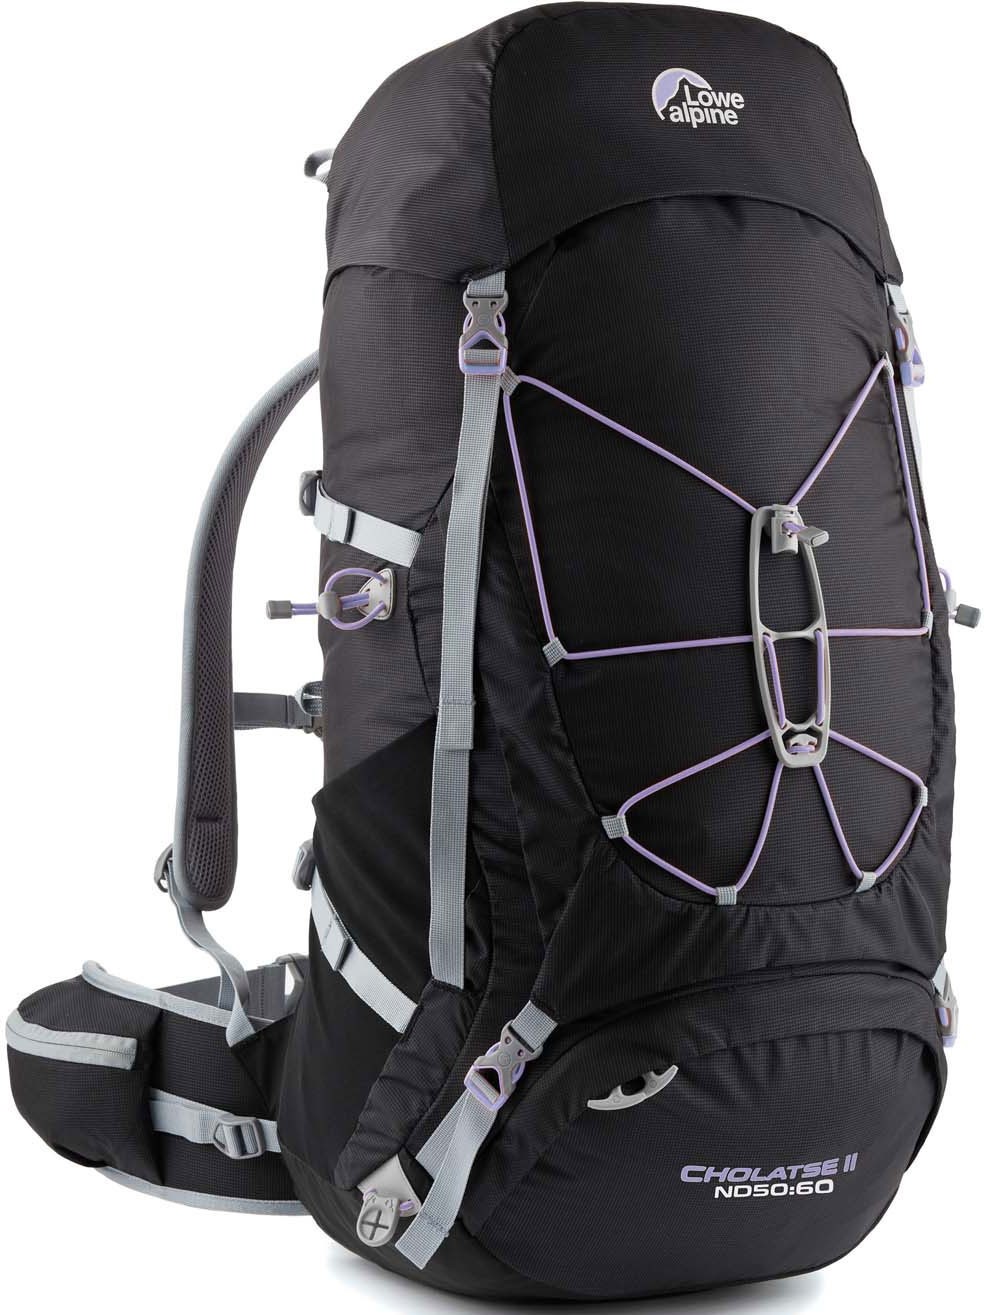 [ Lowe Alpine ] Cholatse II ND 50:60 女款 登山背包/大背包 50-60 升 FMP29 黑